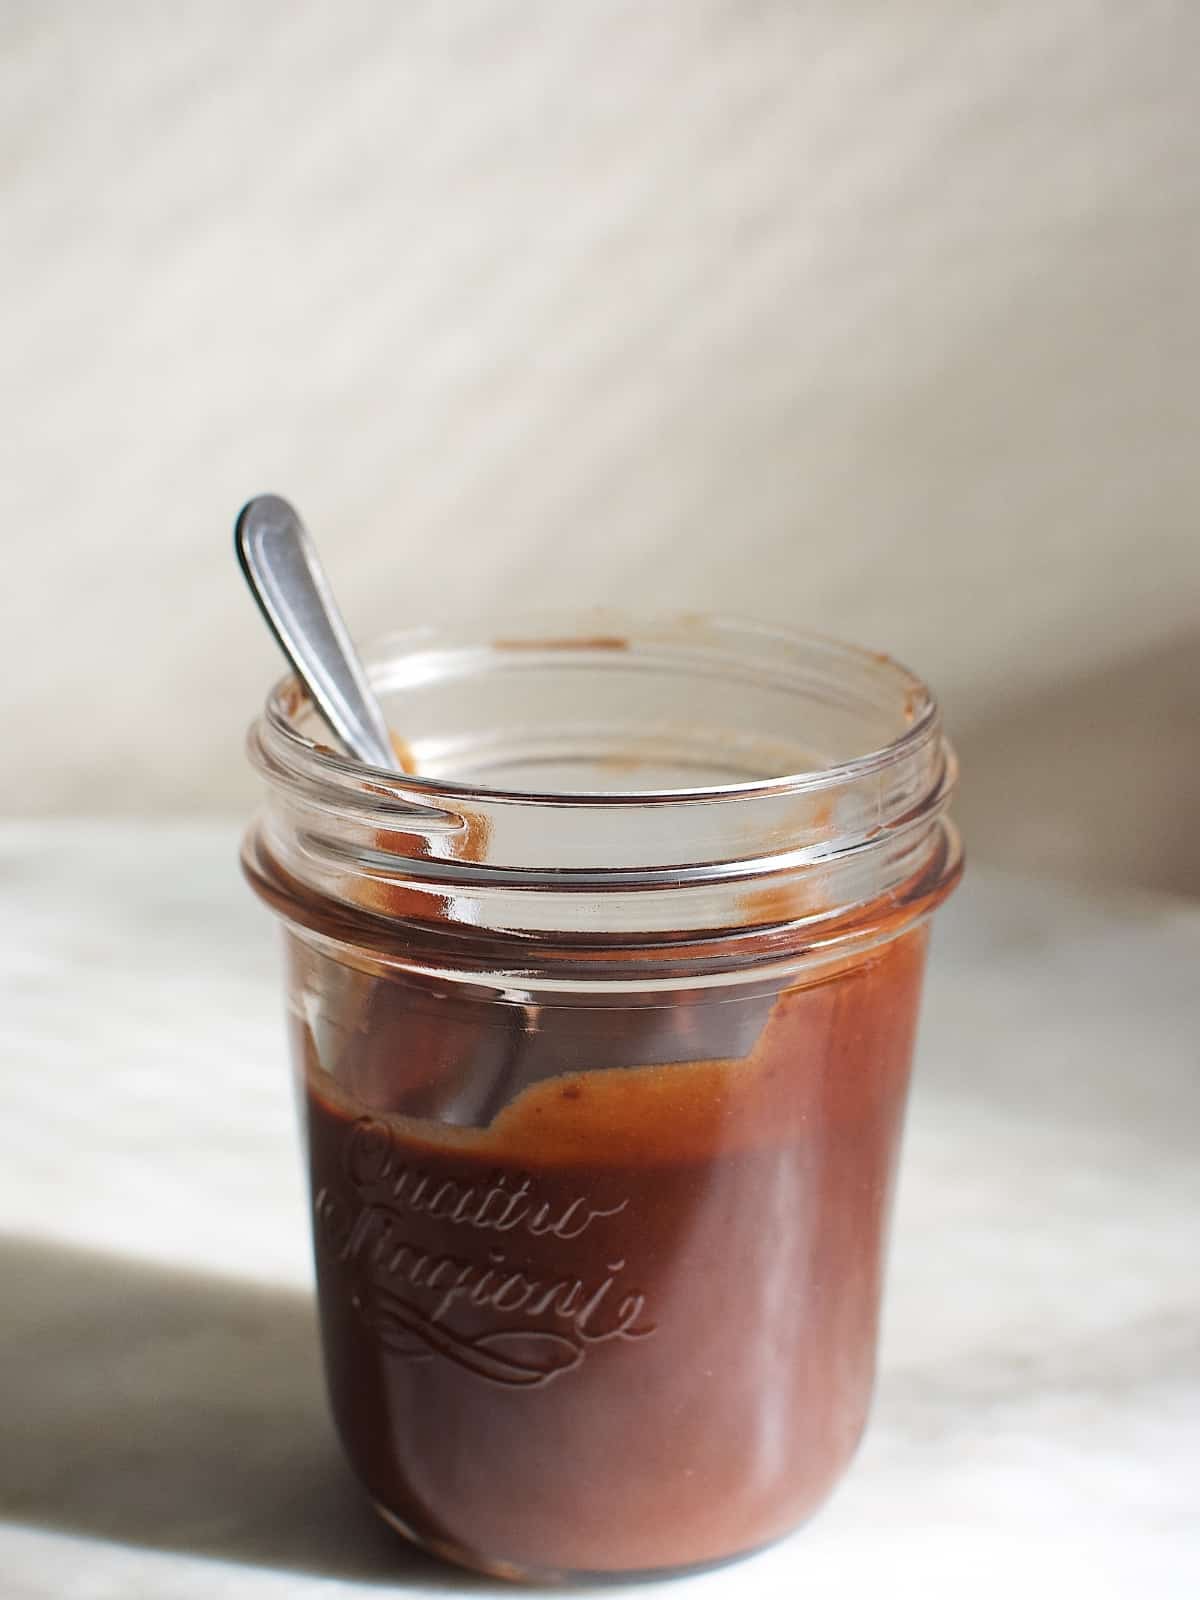 A glass jar of hot fudge.